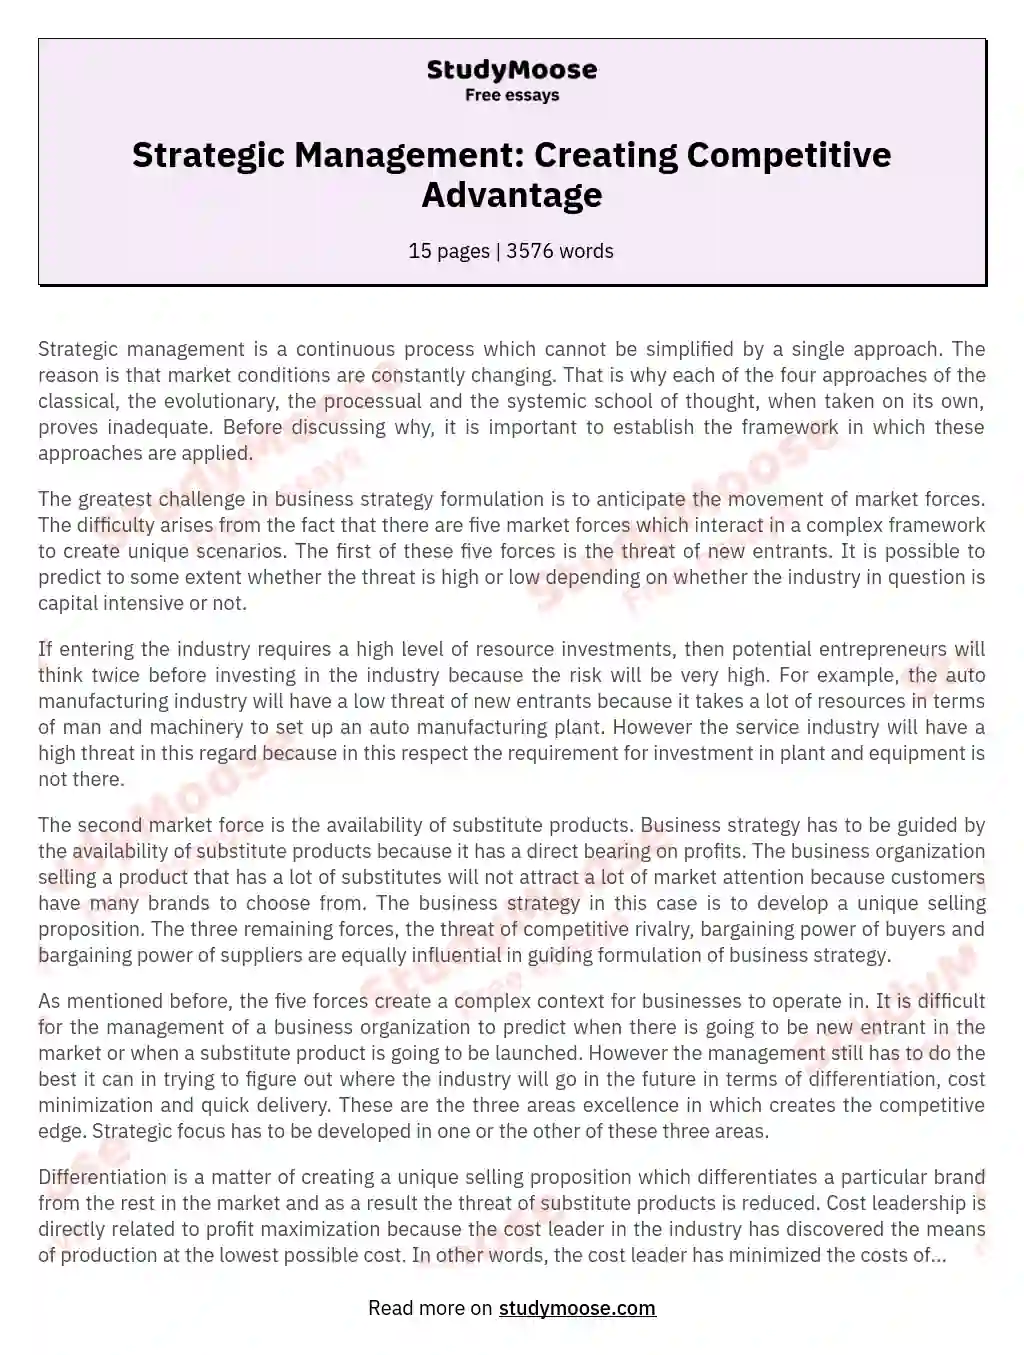 essay on competitive advantage